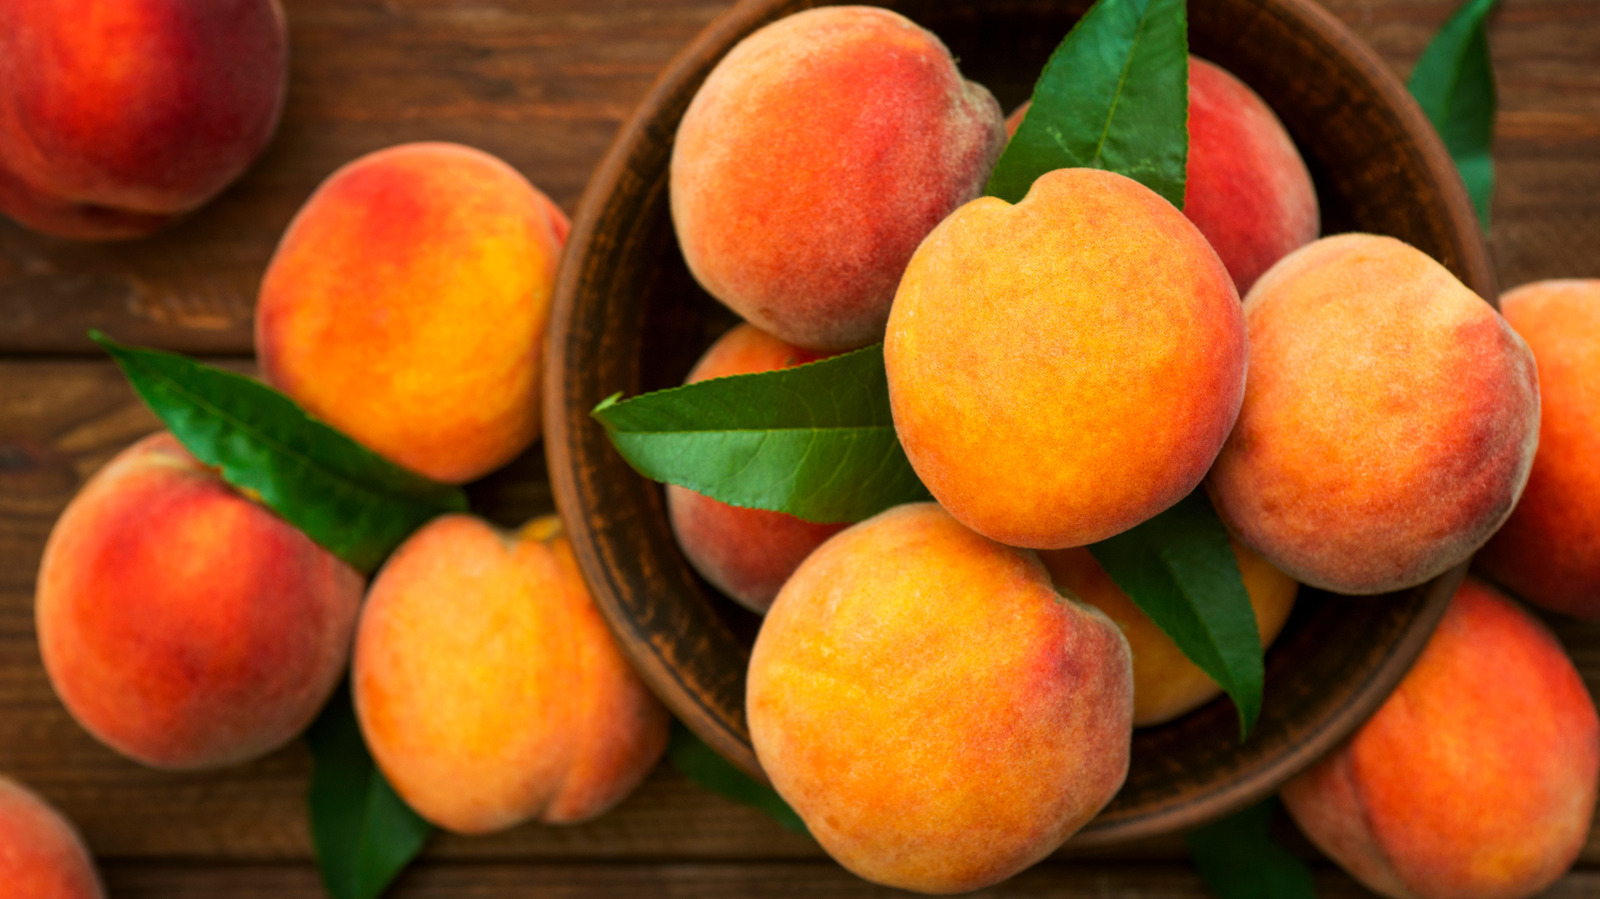 Peach & Nectarine